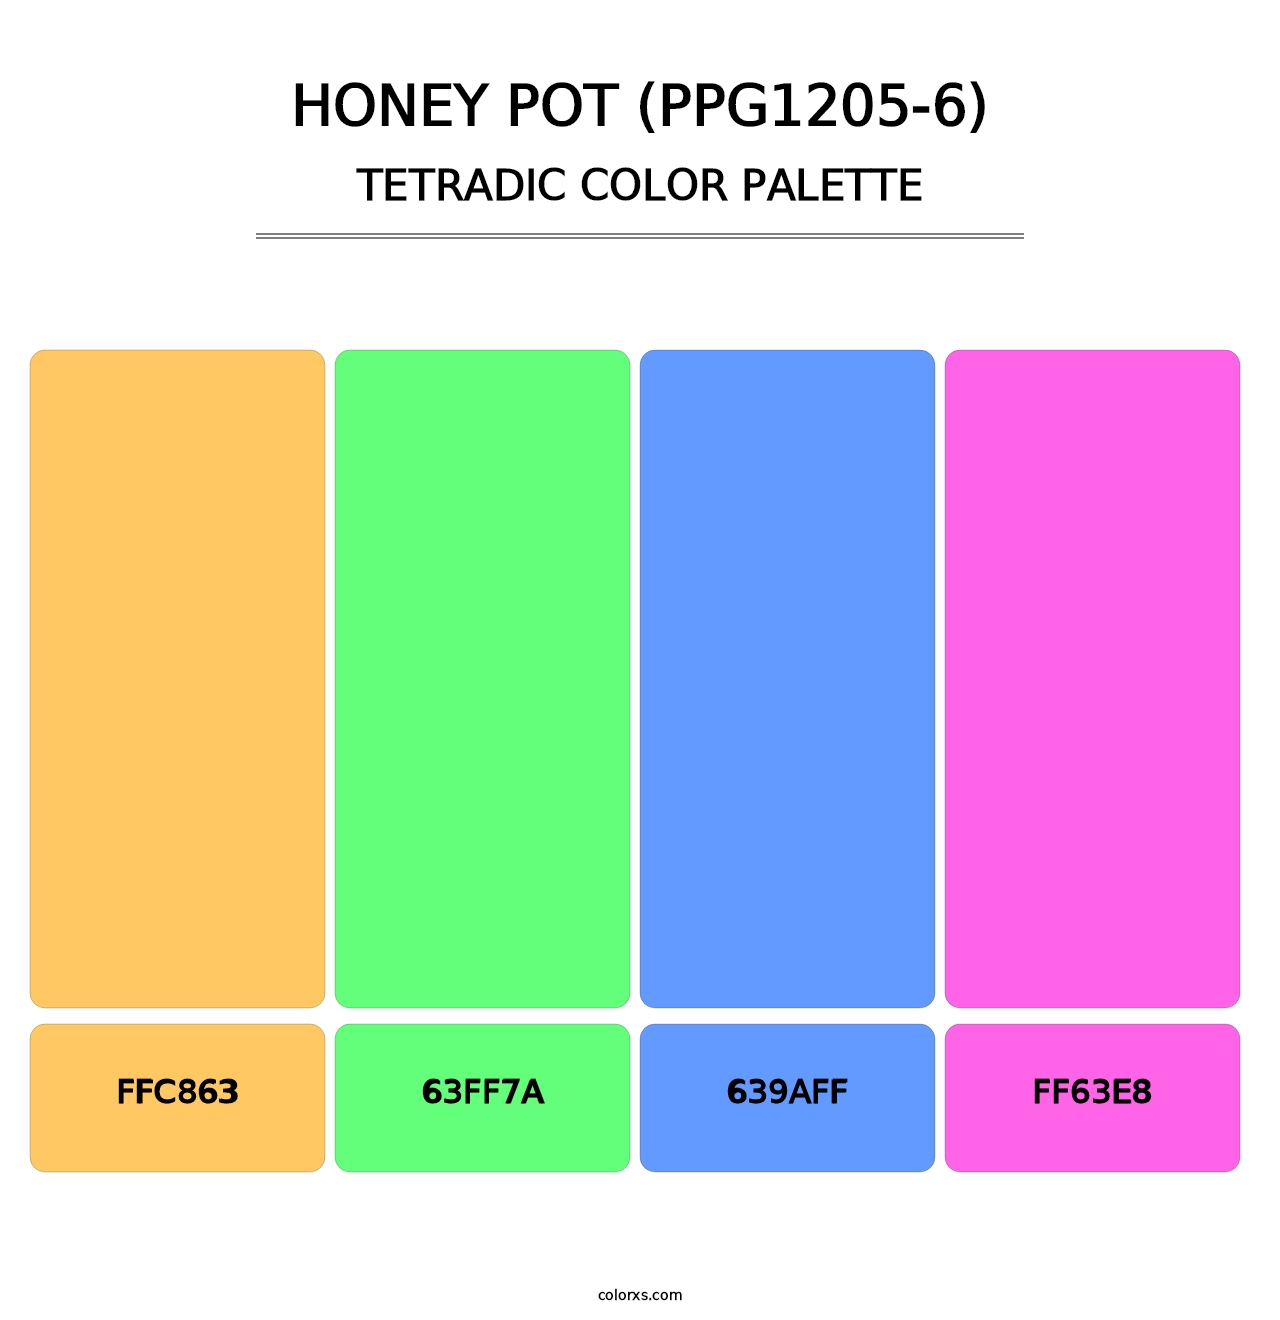 Honey Pot (PPG1205-6) - Tetradic Color Palette